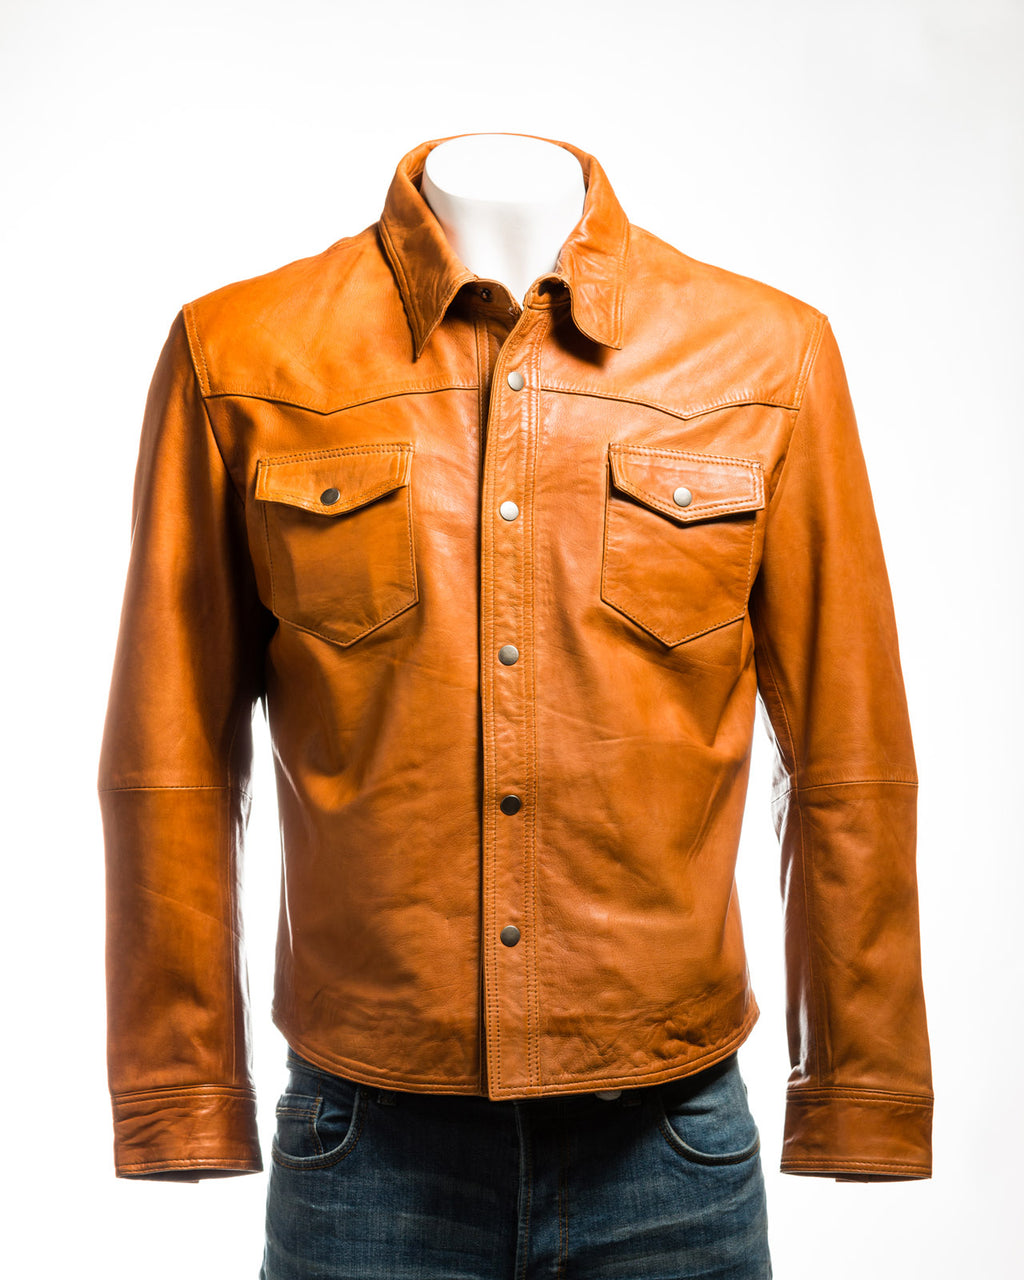 Men's Tan Shirt Style Leather Jacket: Renzo